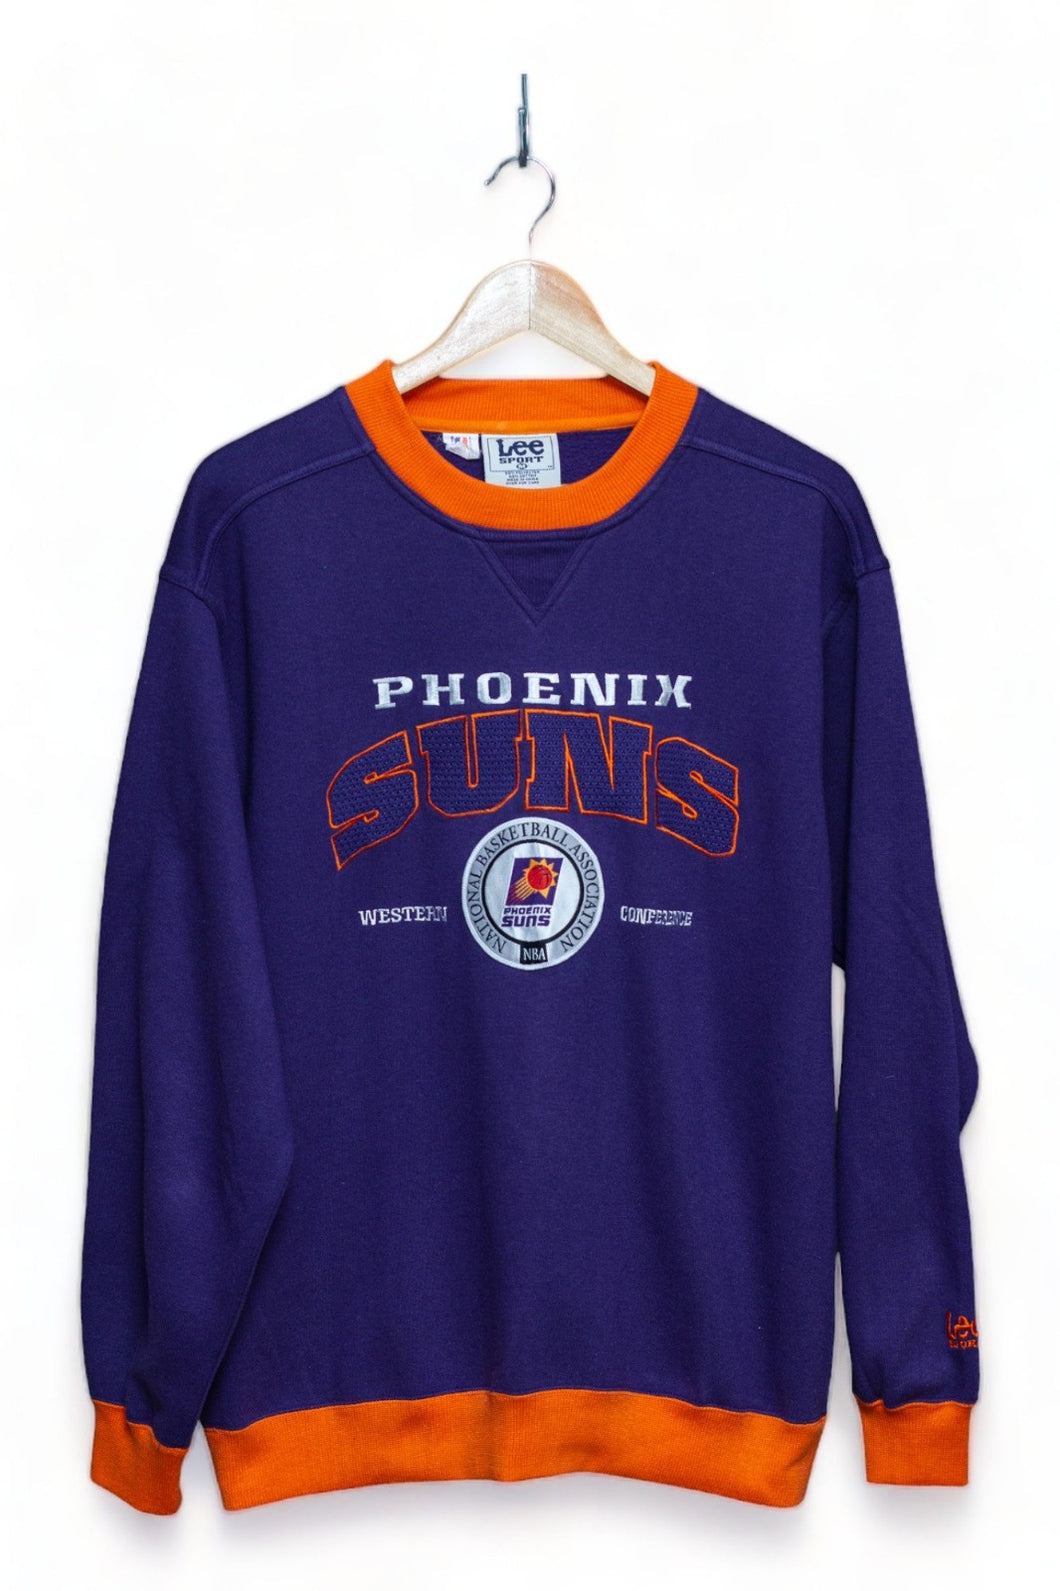 Phoenix Suns - Embroidered Sweater (M)